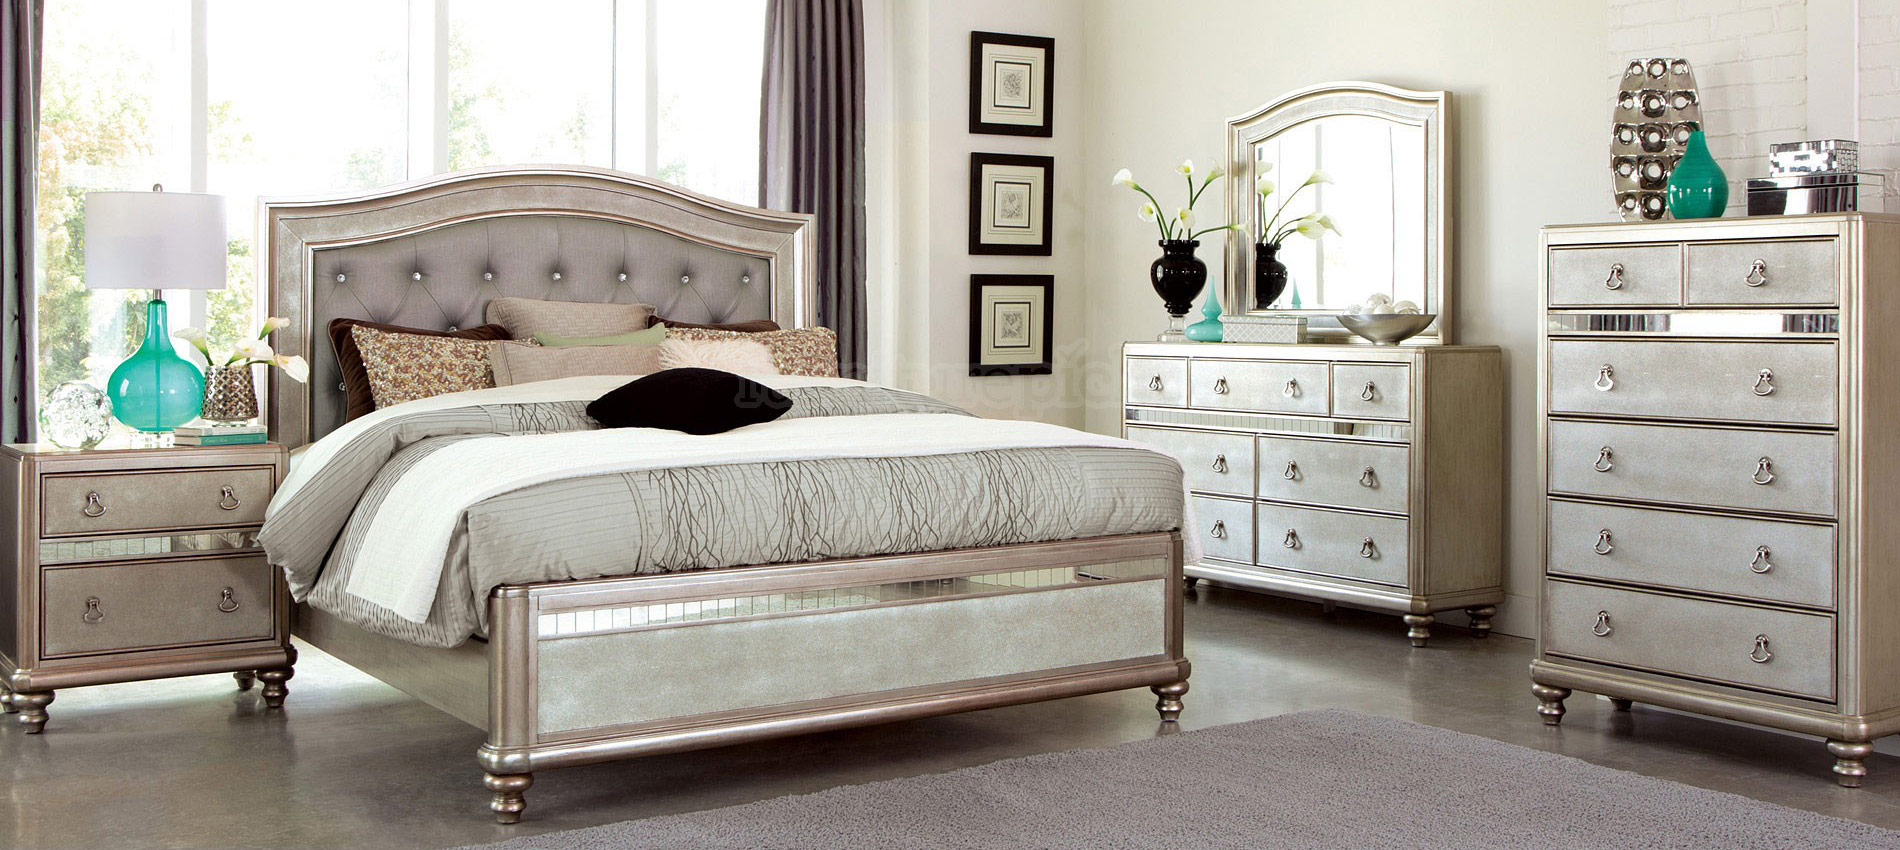 azaleas mattress and furniture